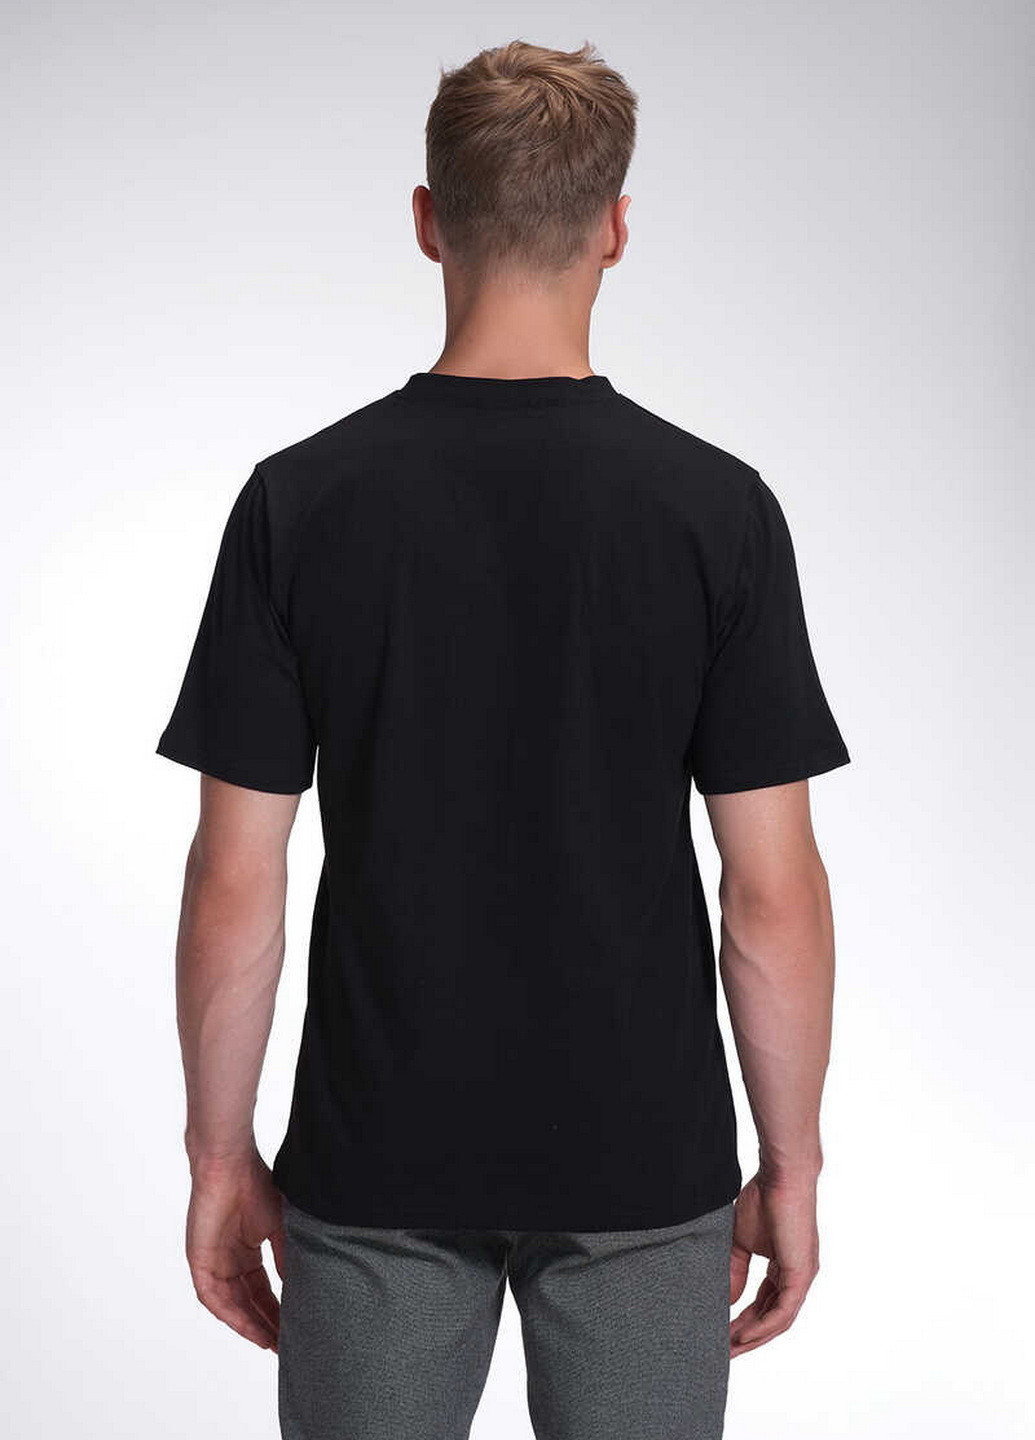 Черная футболка мужская svman с коротким рукавом Sevim